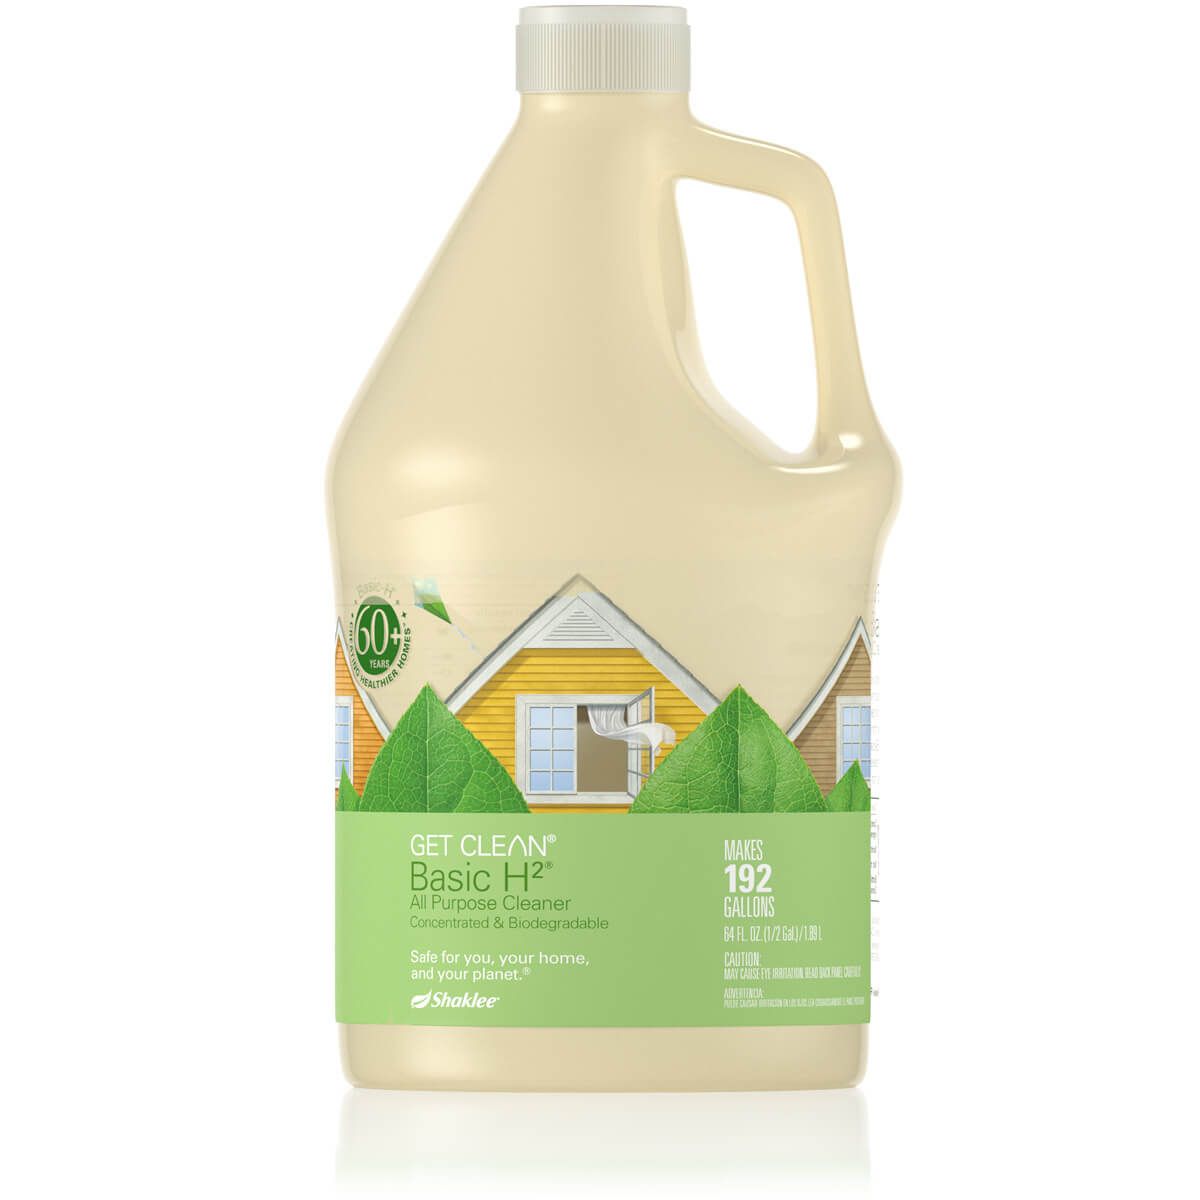 Basic H2® Biodegradable Cleaner